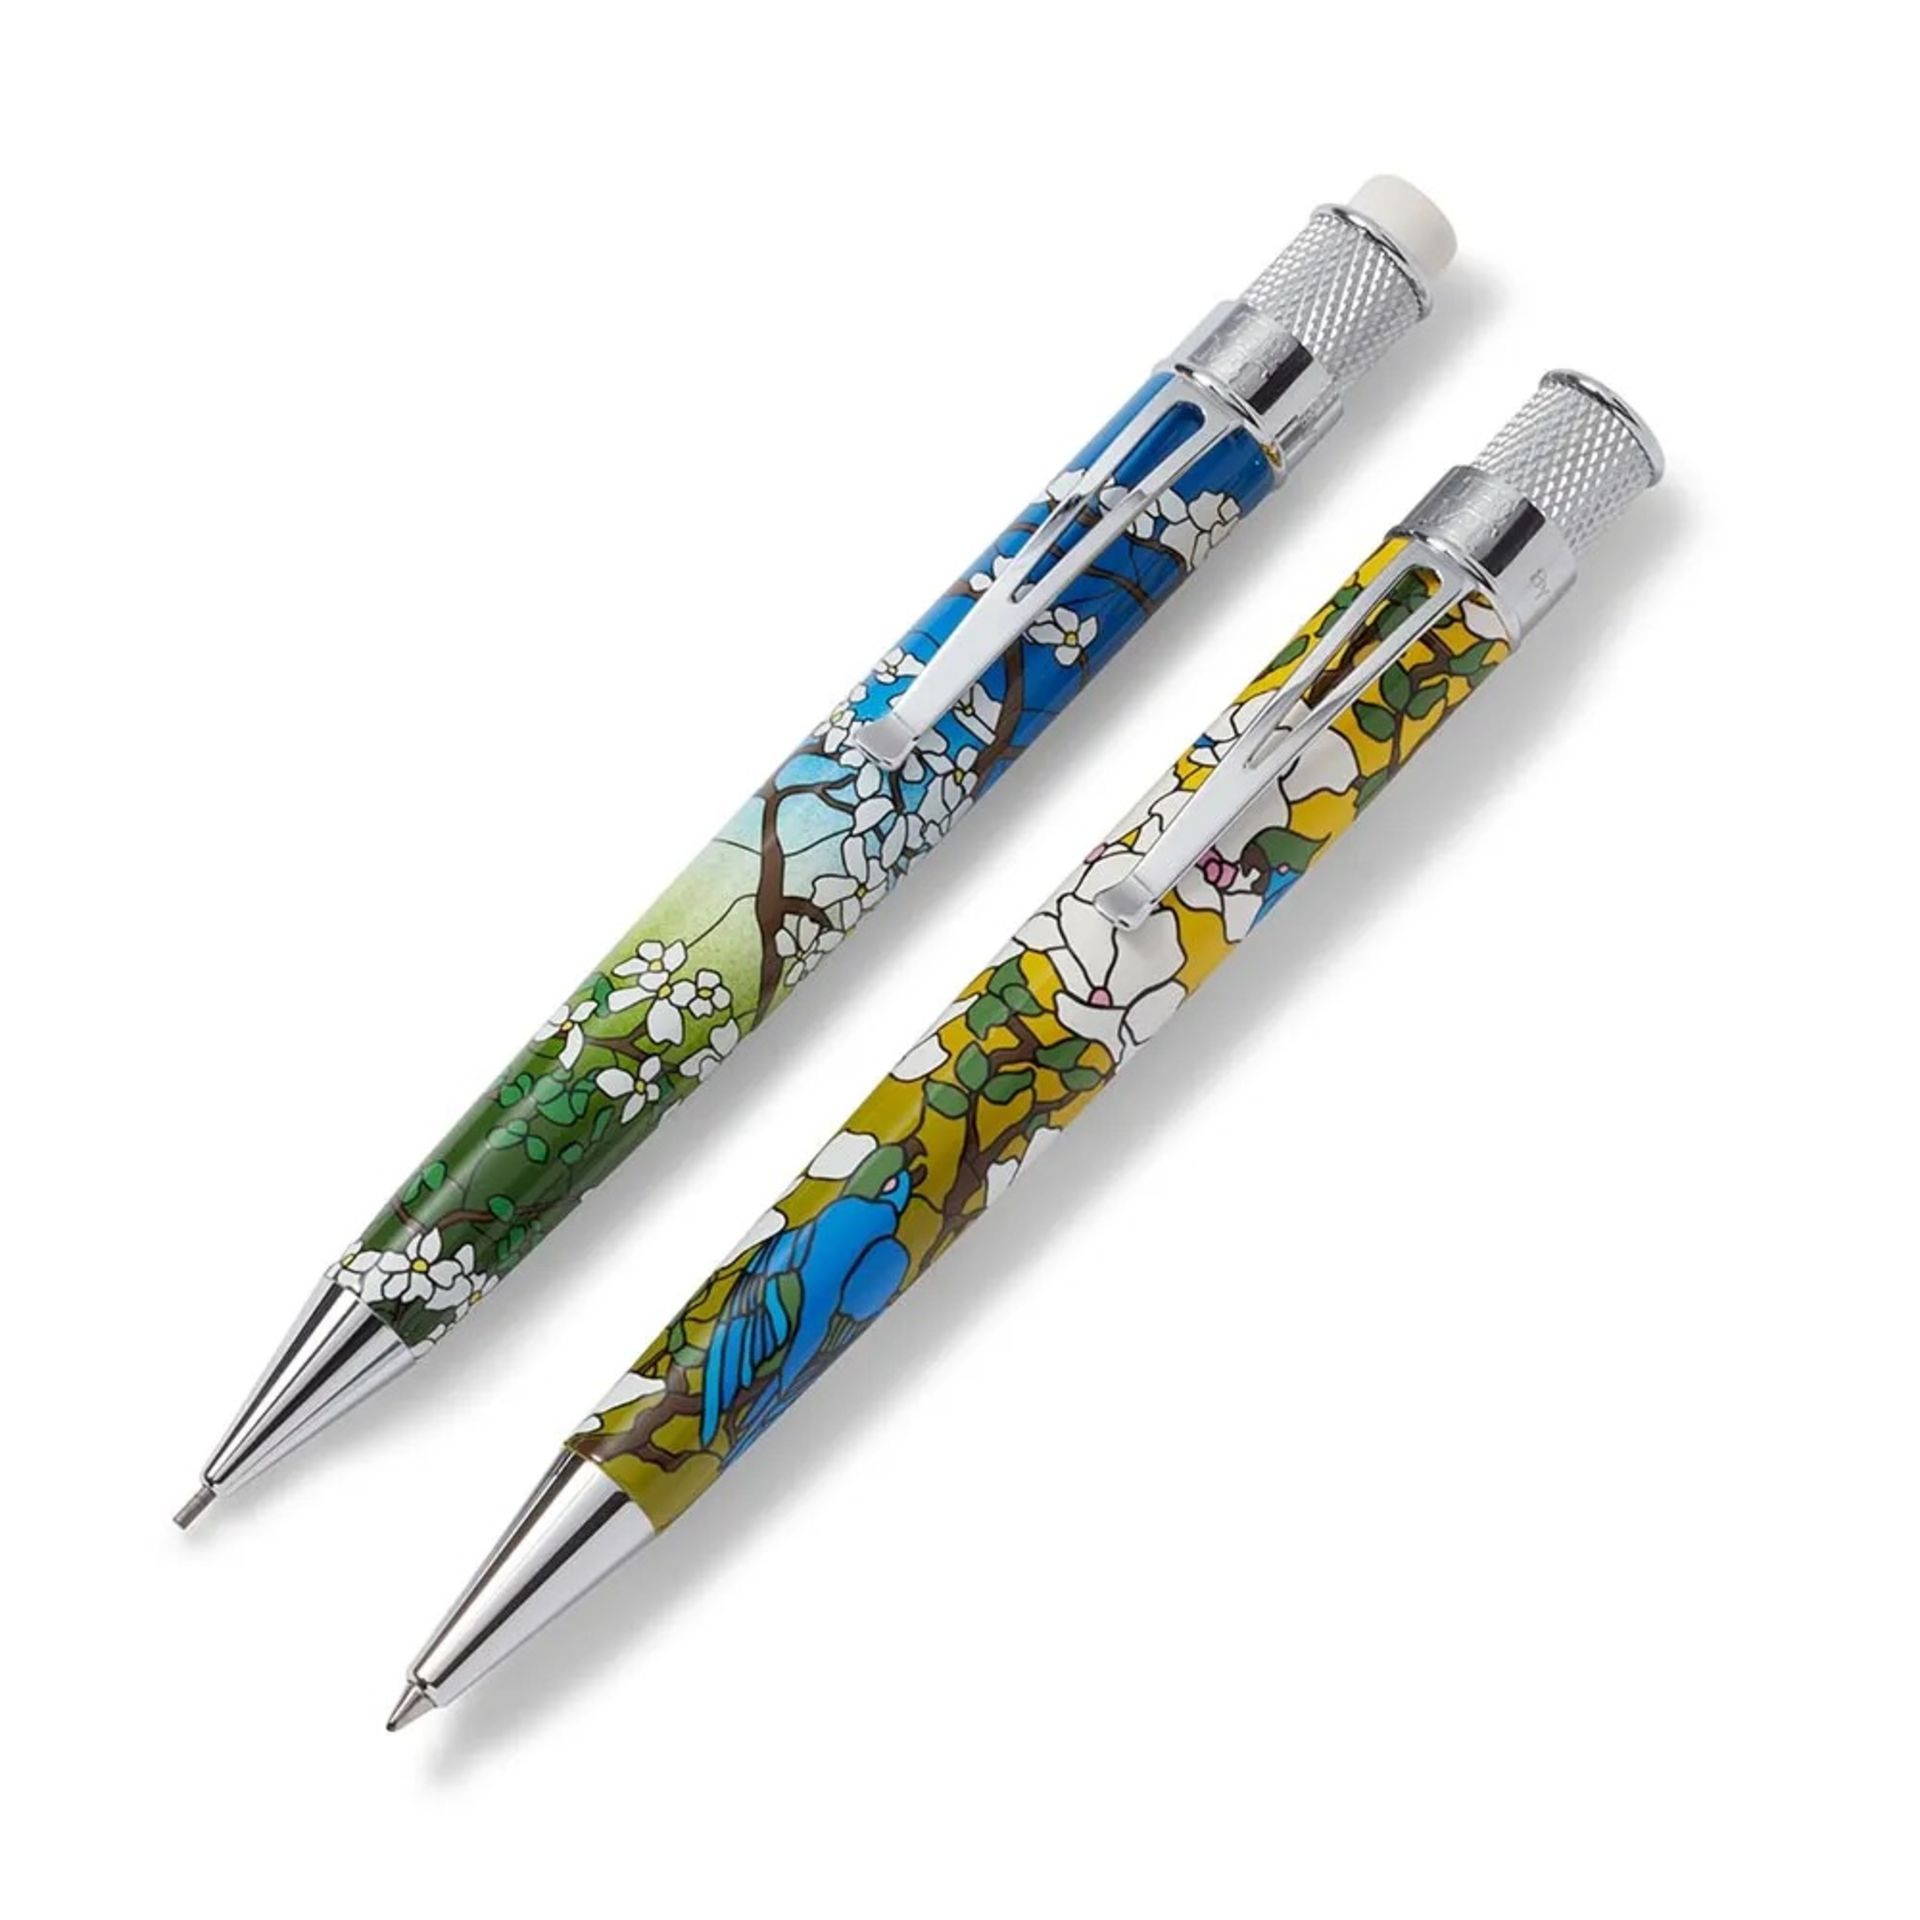 Louis Comfort Tiffany Pen and Pencil